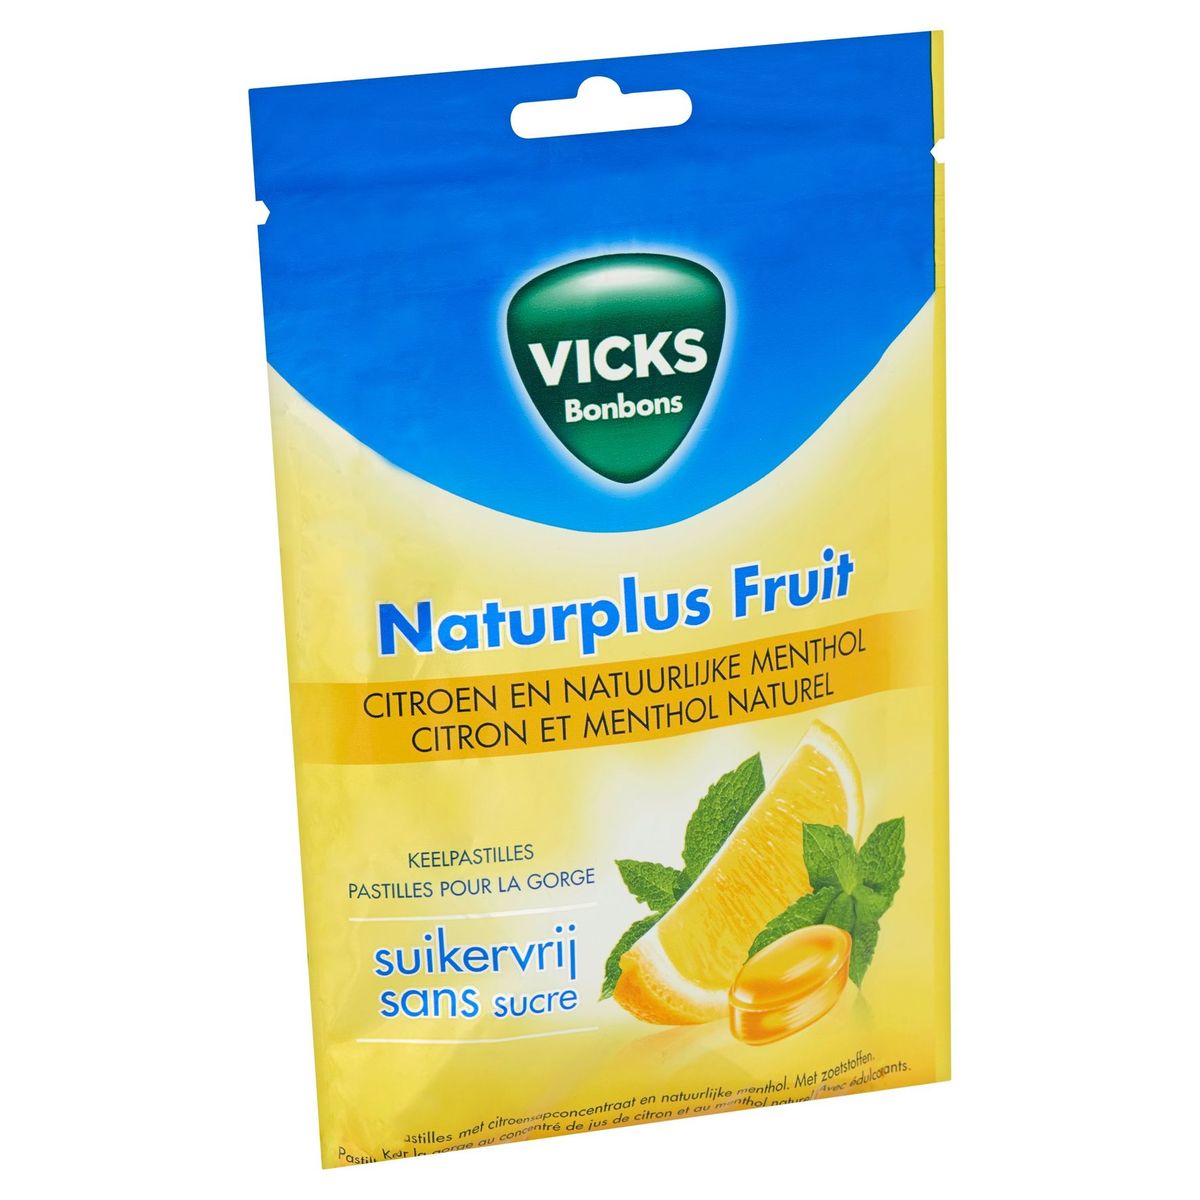 Vicks Bonbons Naturplus Fruit Citron et Menthol Naturel 72 g